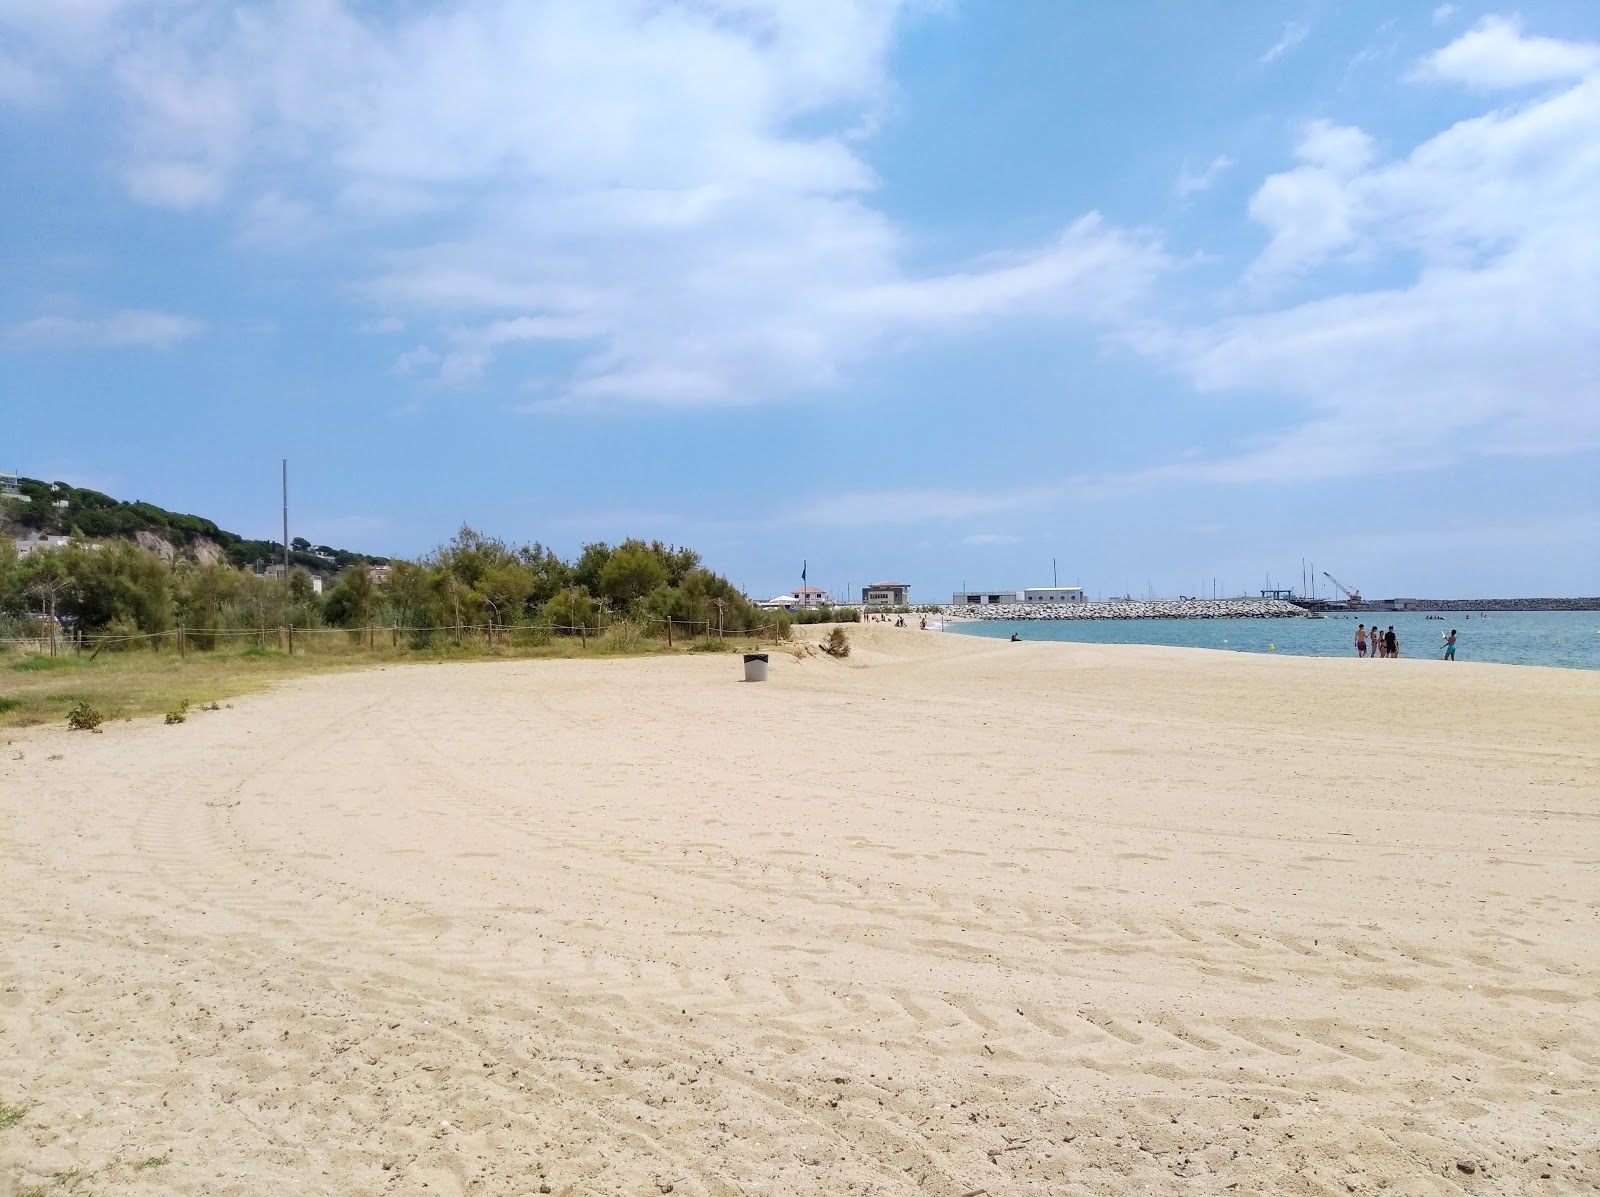 Foto de Playa de la Picordia com água turquesa superfície